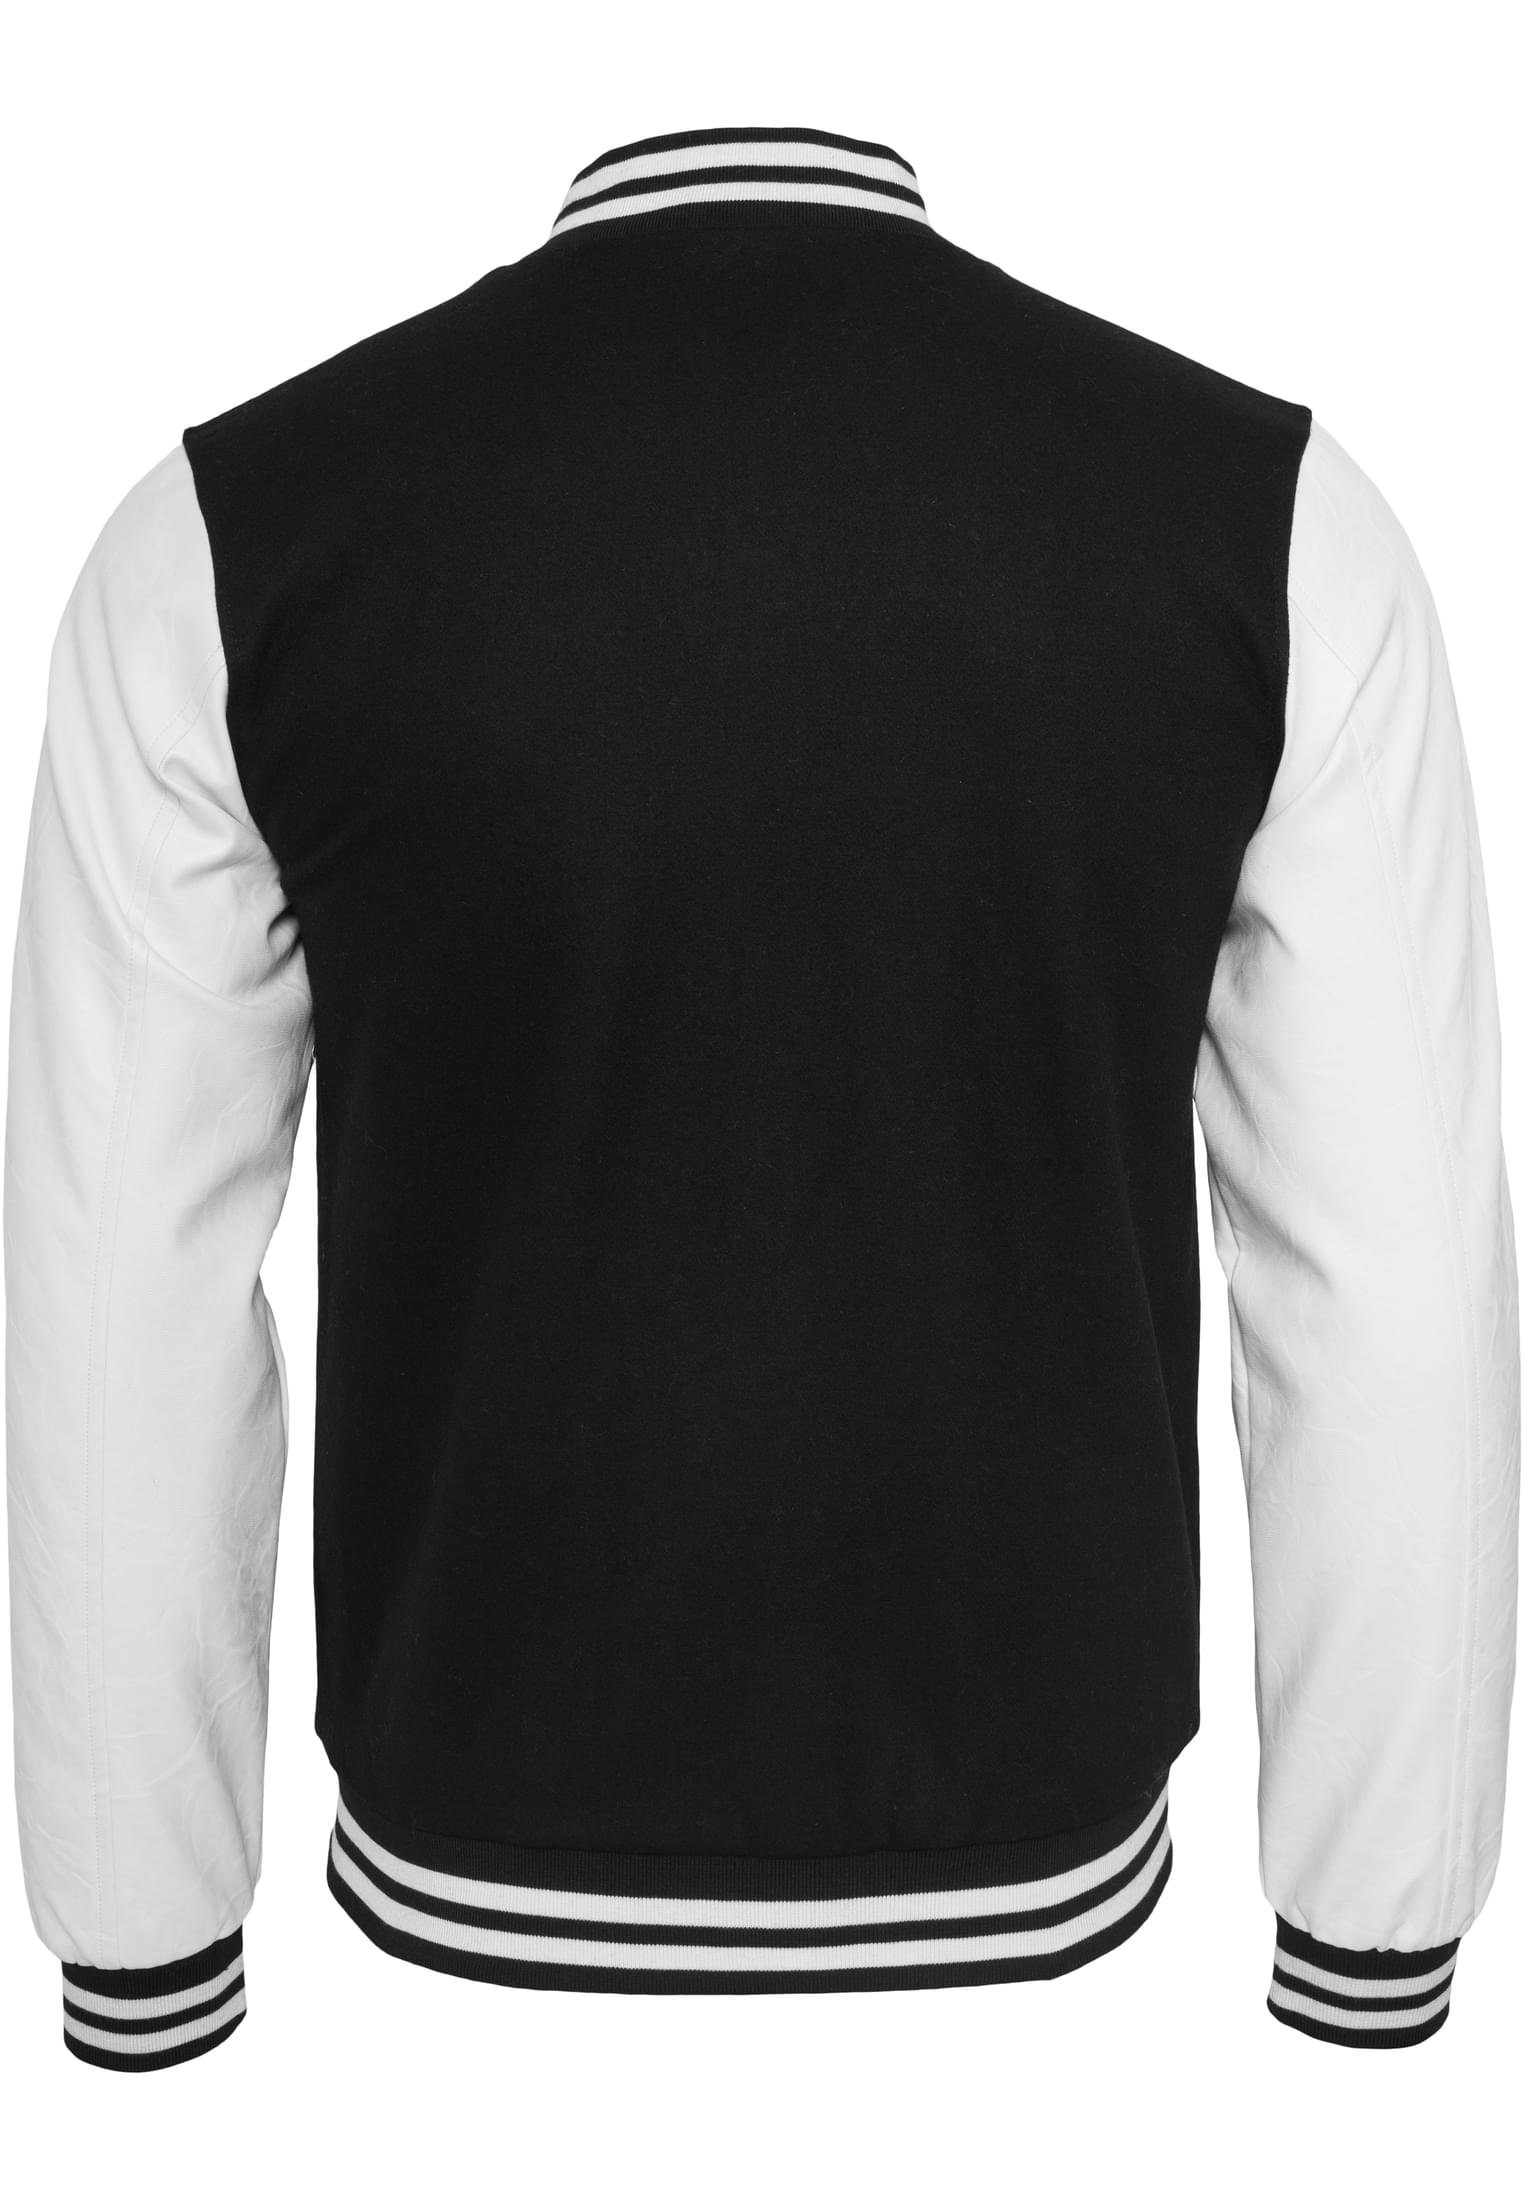 URBAN CLASSICS Outdoorjacke Herren (1-St) Oldschool College Jacket black/white